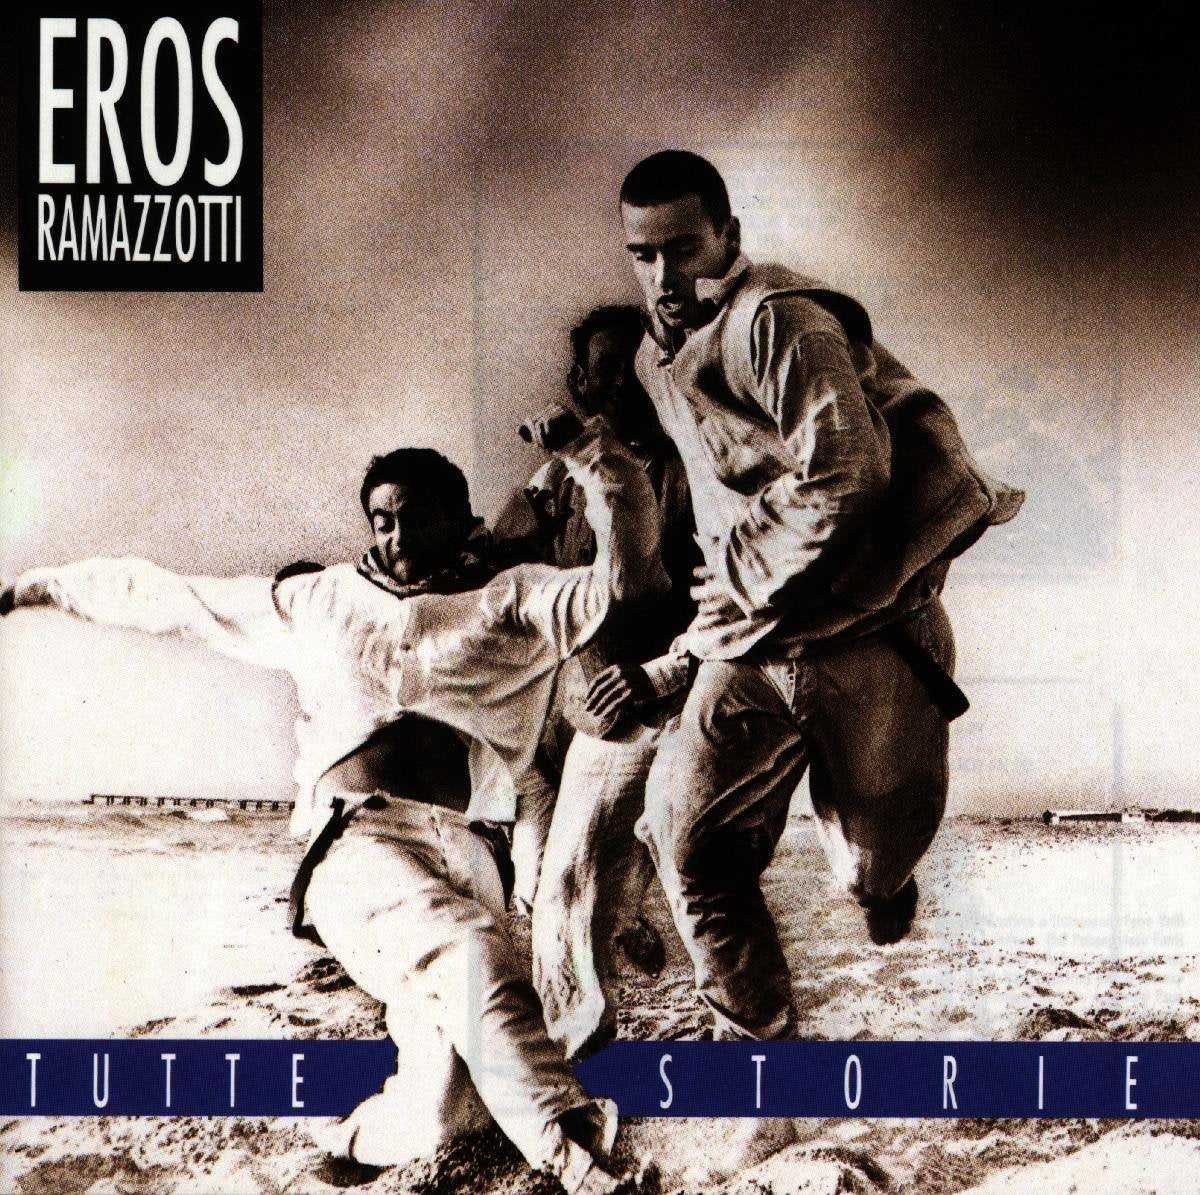 Eros Ramazzotti – "Tutte Storie" CD